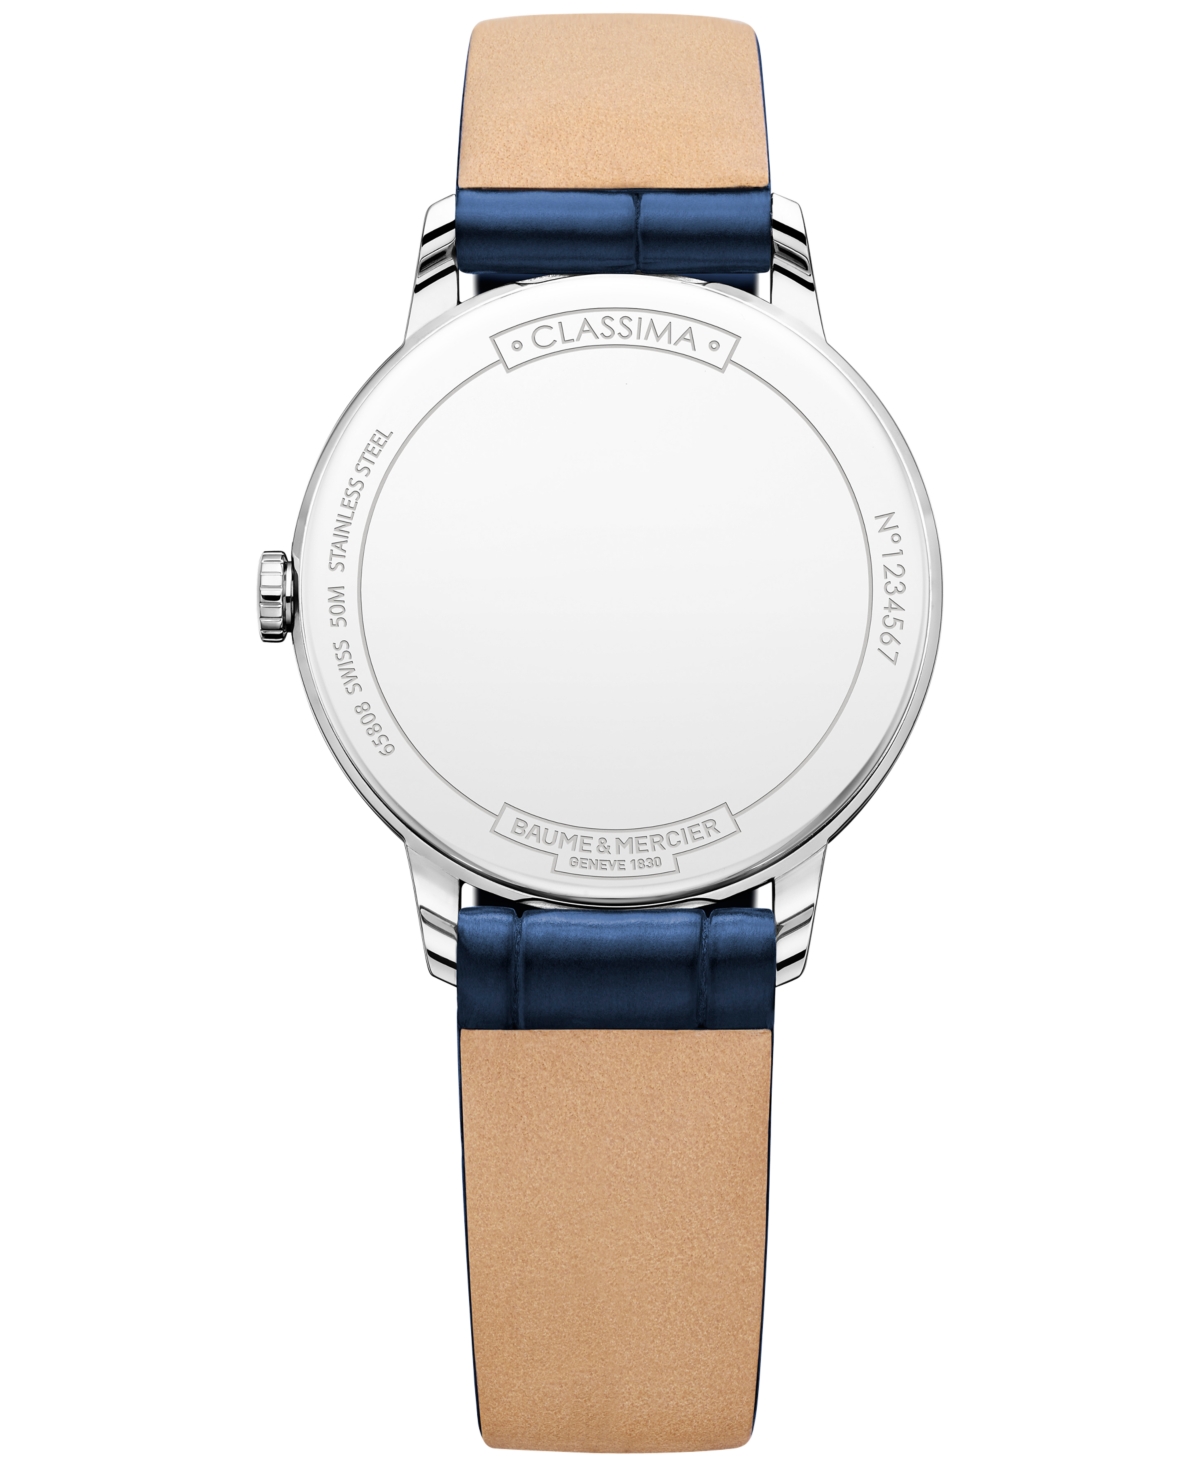 Shop Baume & Mercier Women's Swiss Classima Blue Leather Strap Watch 31mm M0a10353